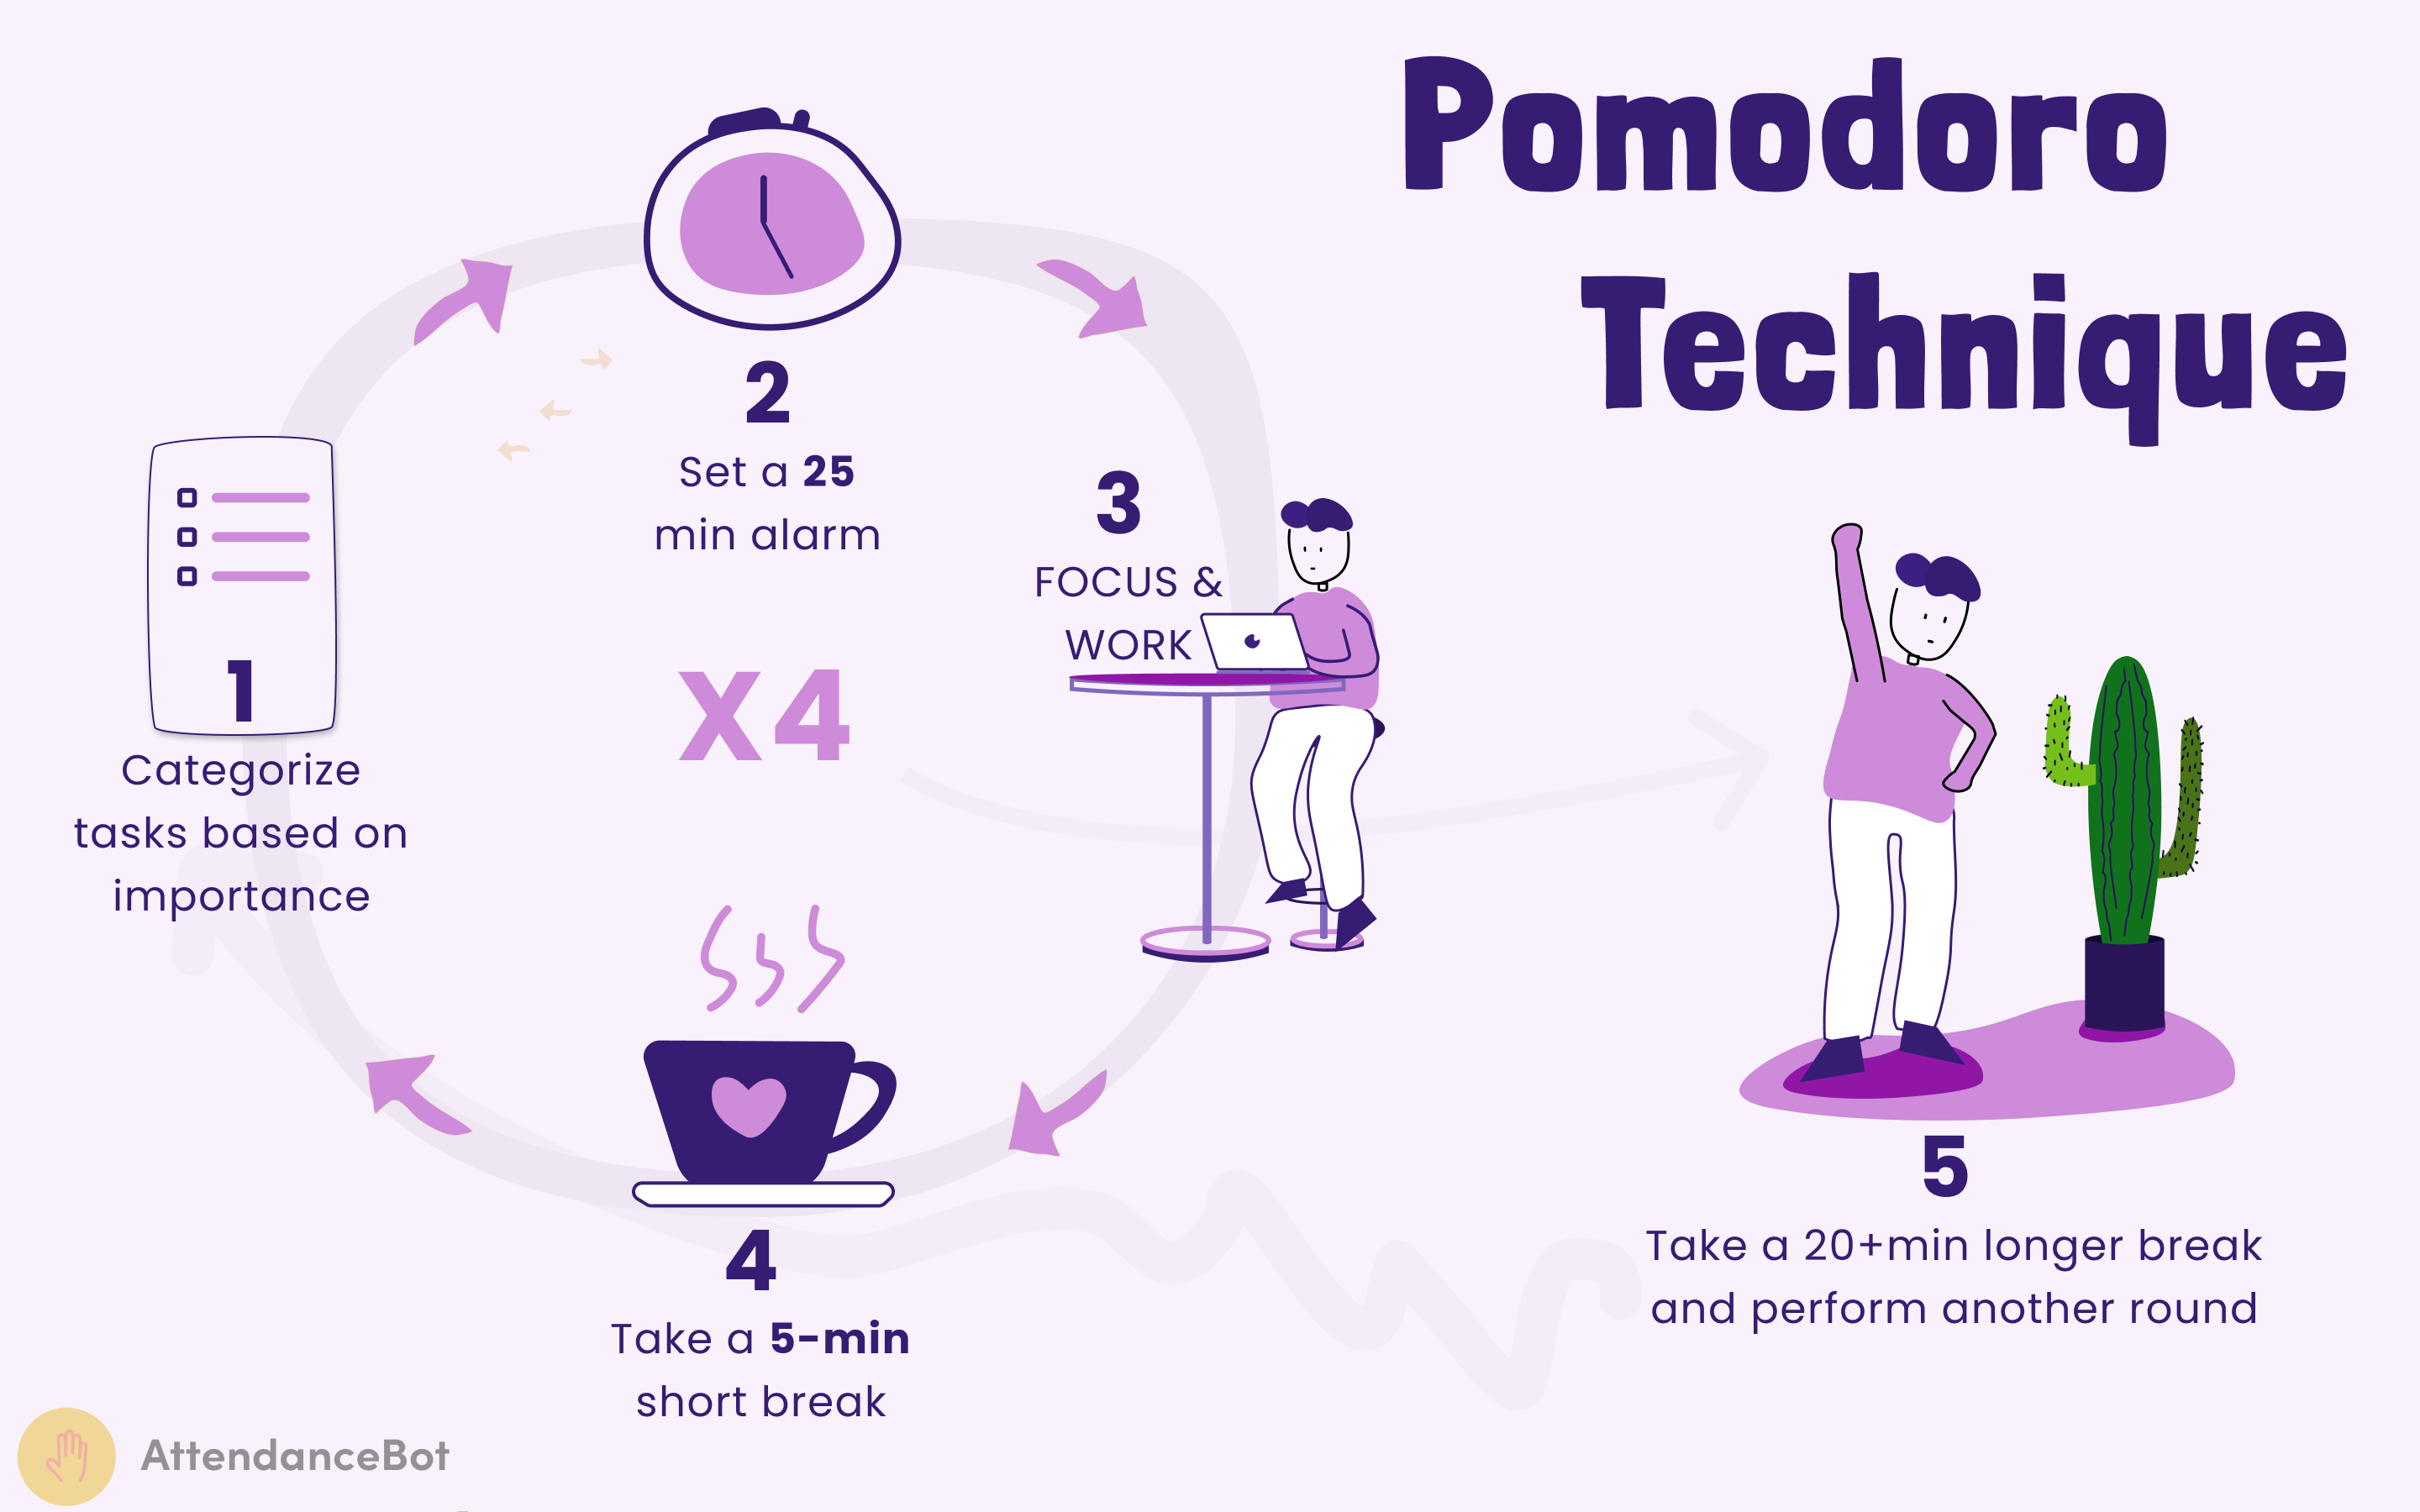 The Pomodoro technique: A proven method to improve your productivity